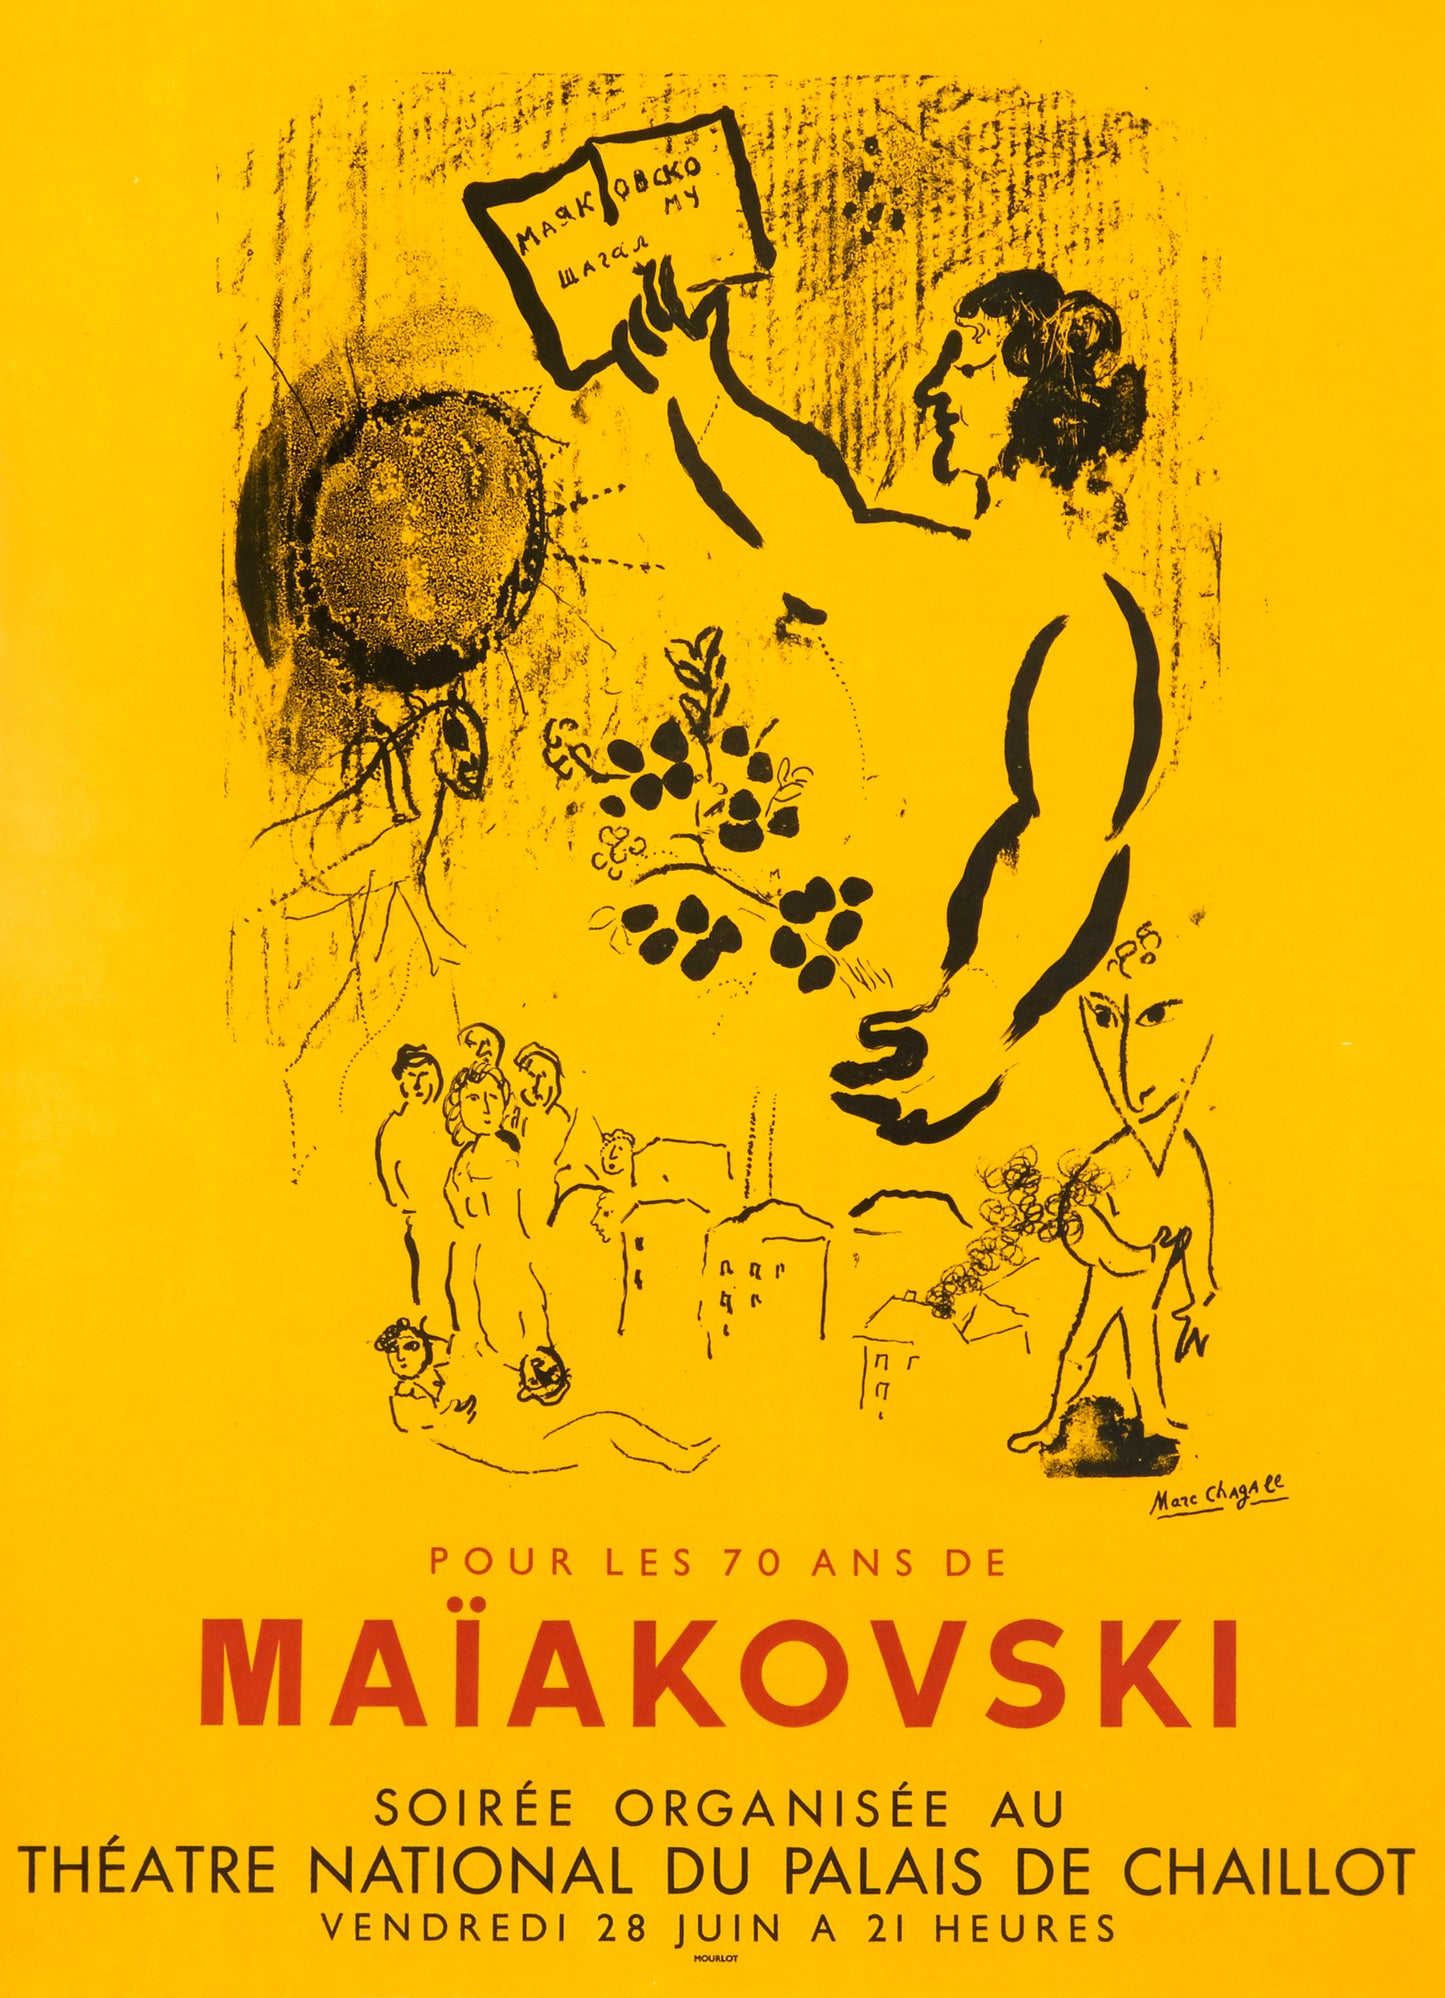 Hommage to Maïakovski by Marc Chagall, 1963 - Mourlot Editions - Fine_Art - Poster - Lithograph - Wall Art - Vintage - Prints - Original